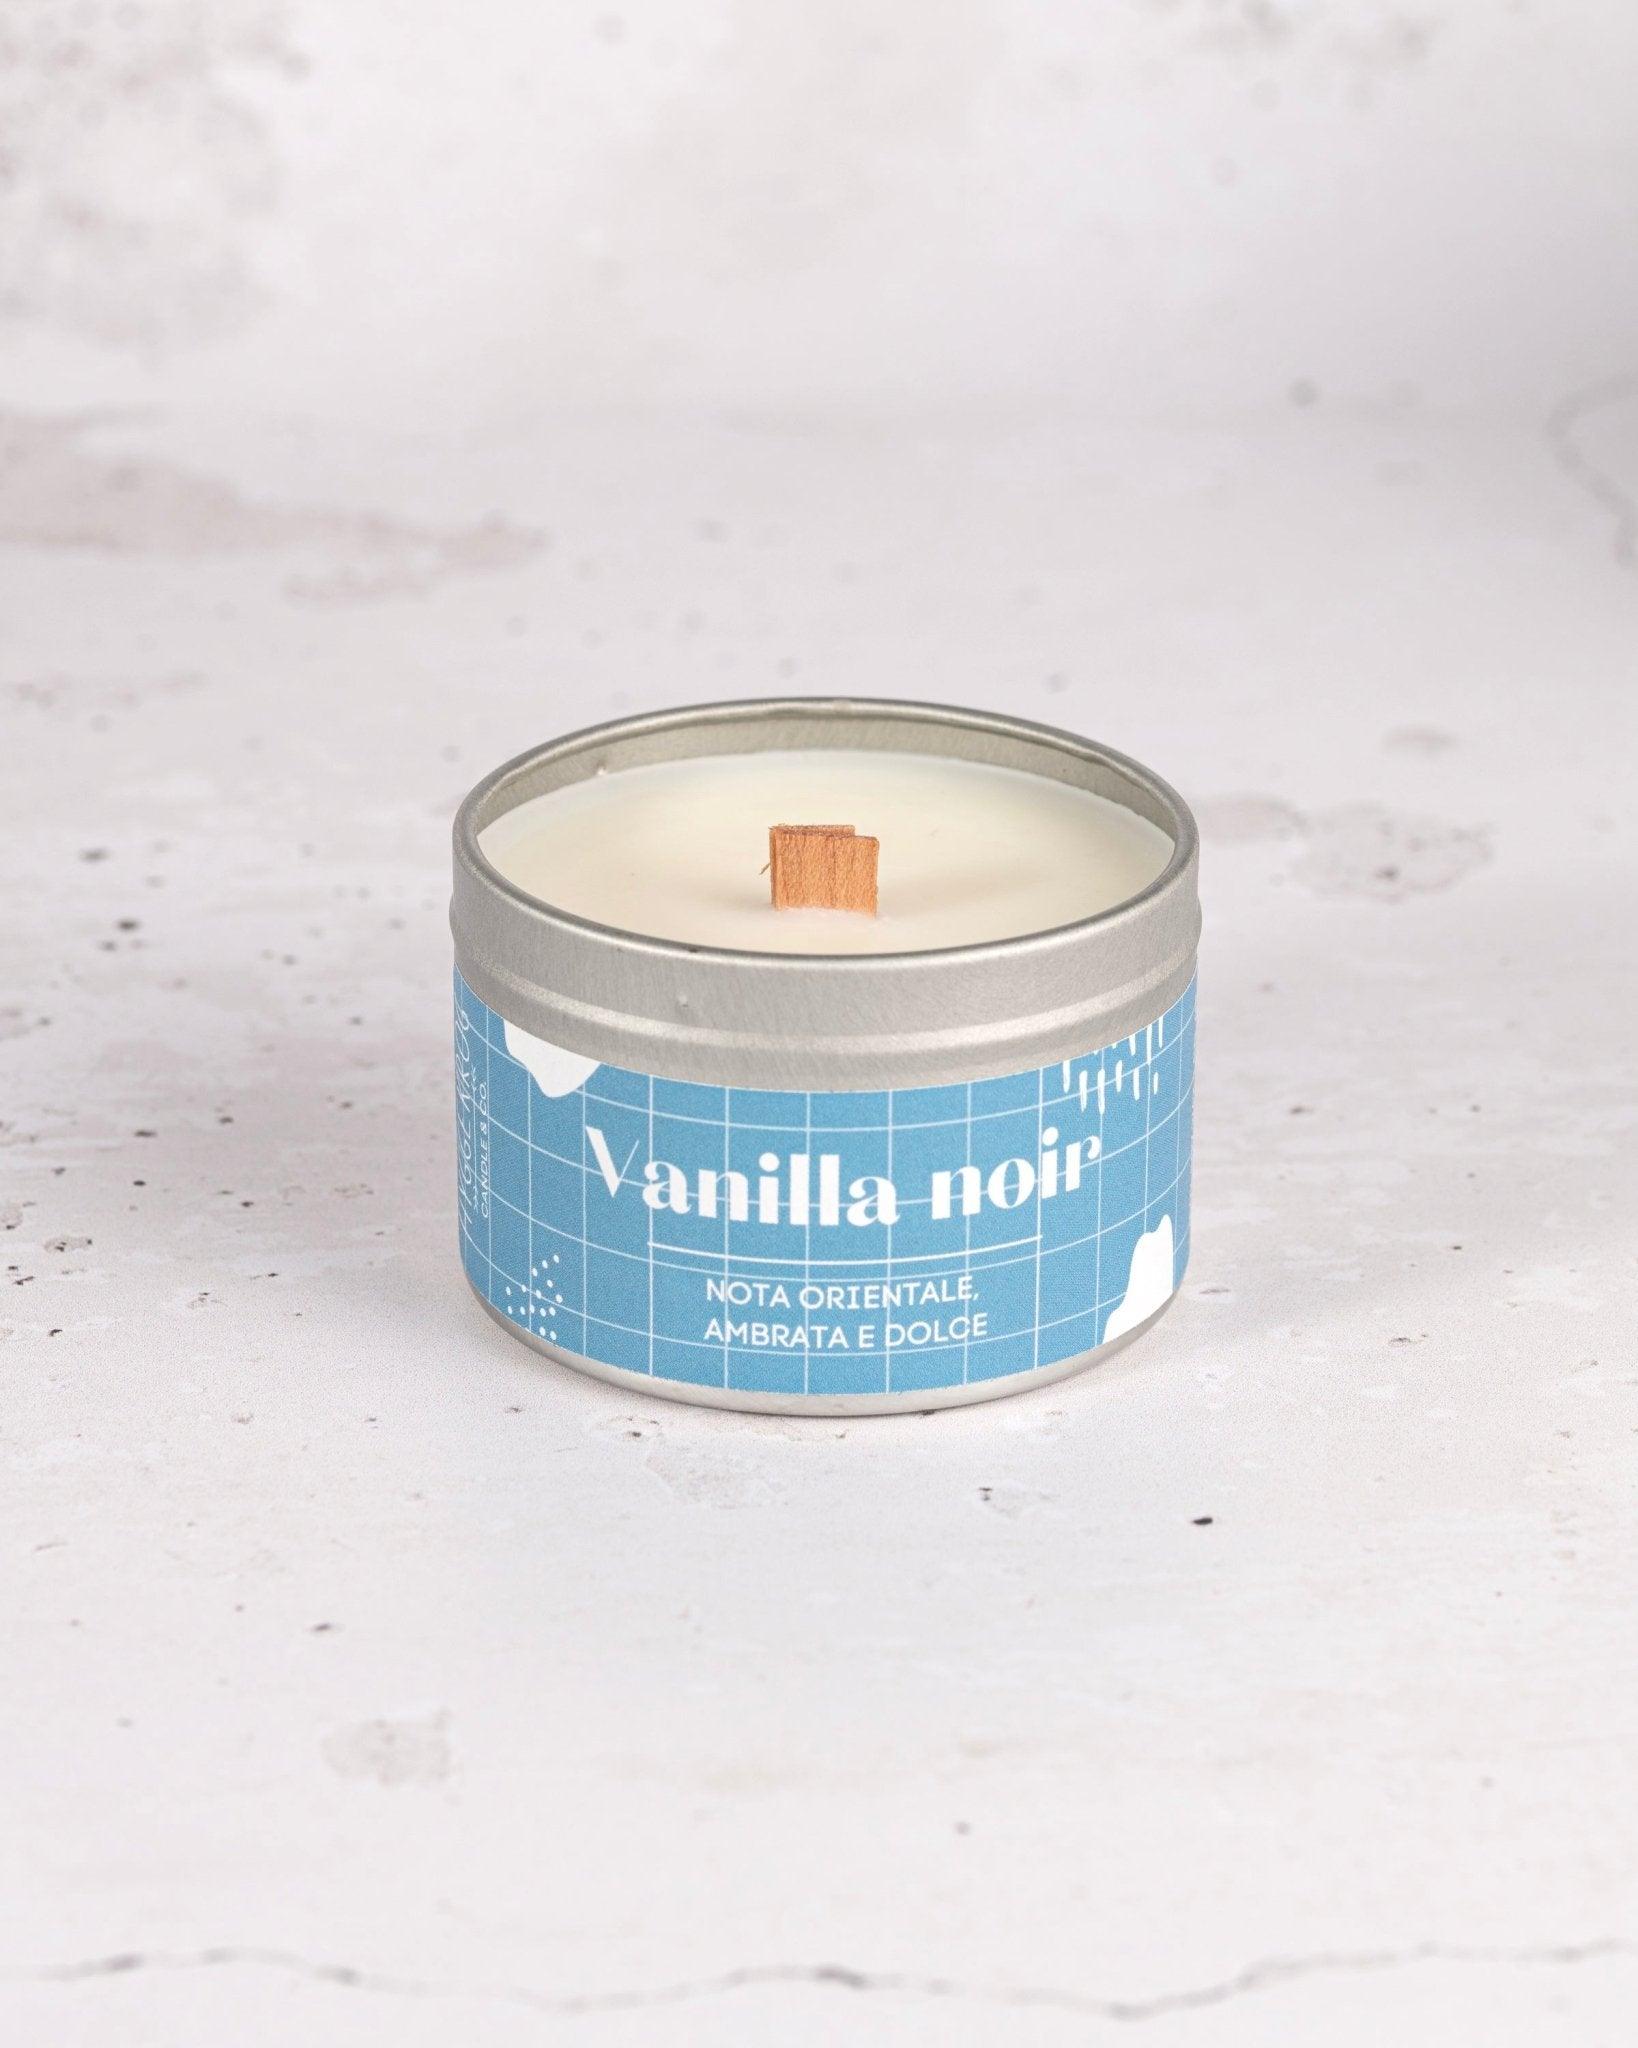 Candela Vanilla noir | vaniglia nera e sandalo - Hyggekrog - Candle&Co